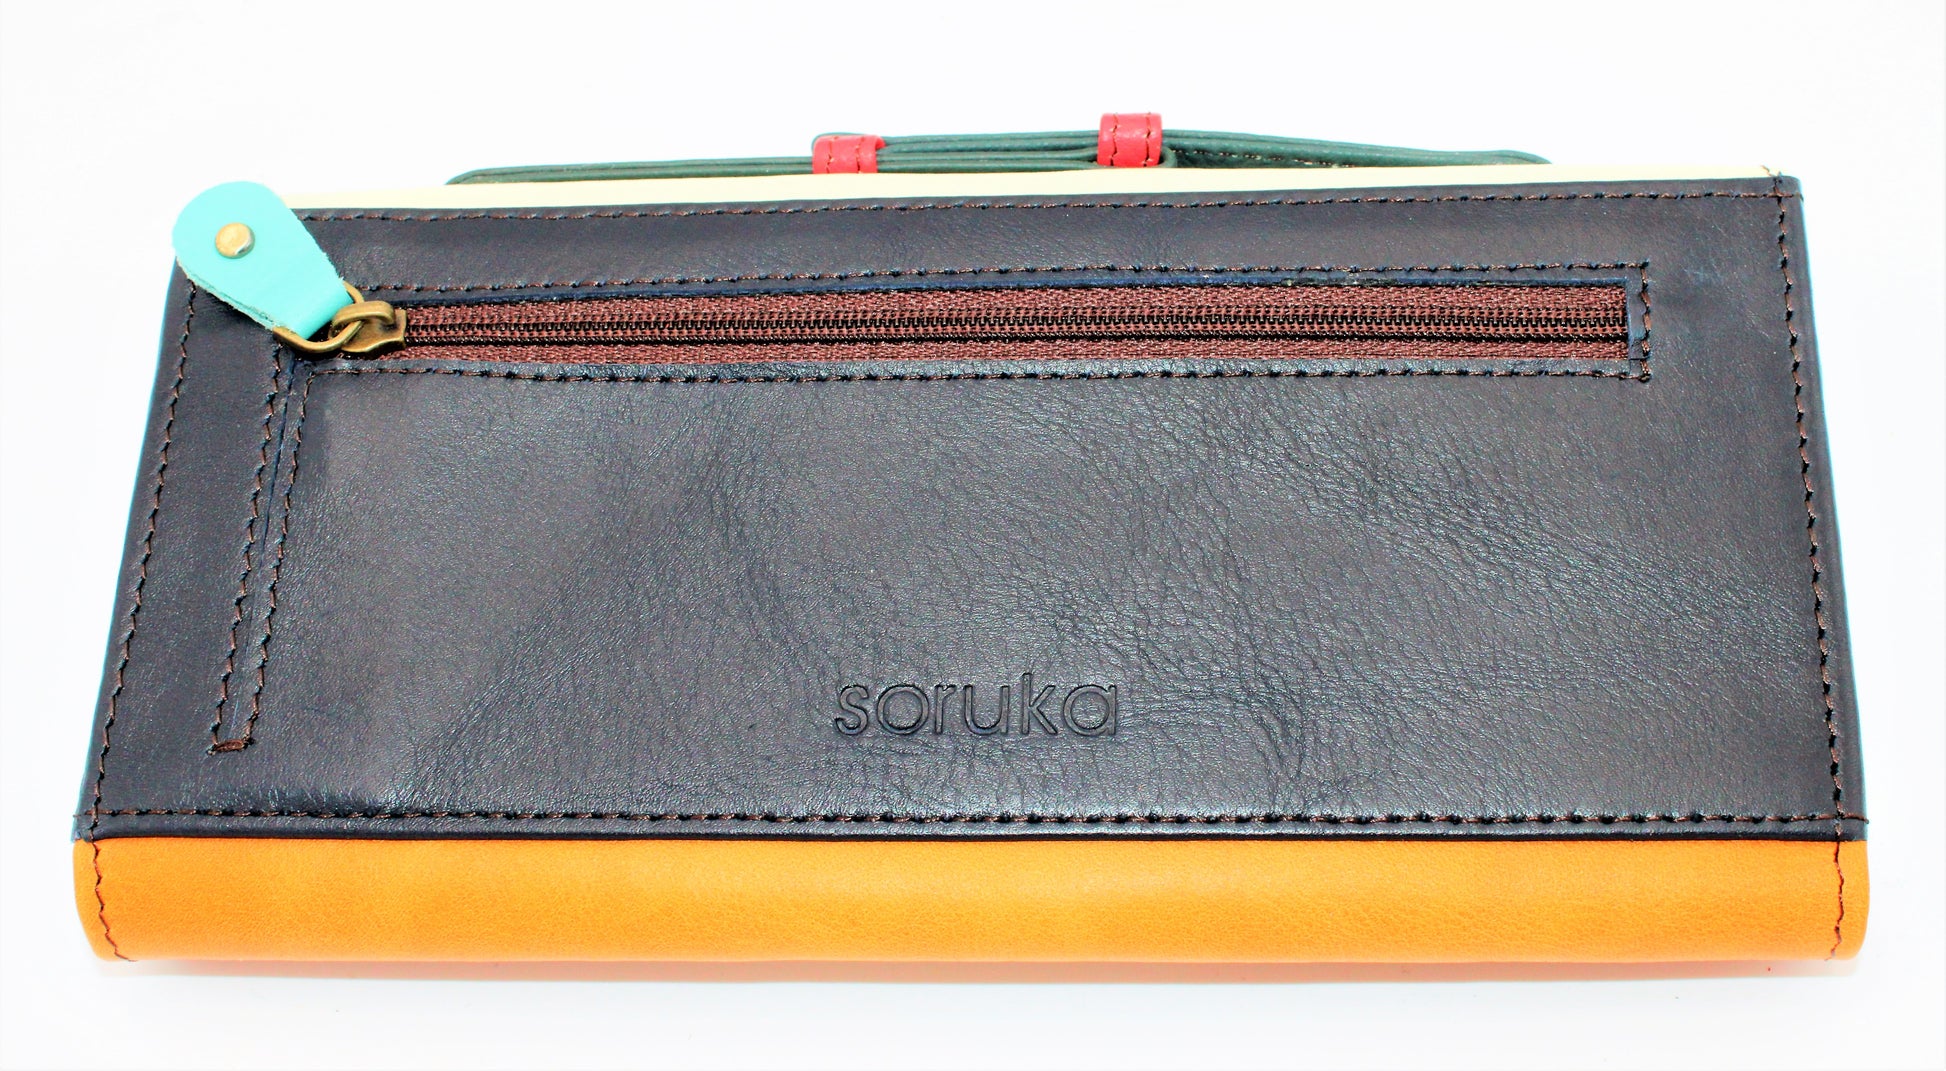 Soruka Smart Plain Leather Wallet Back View